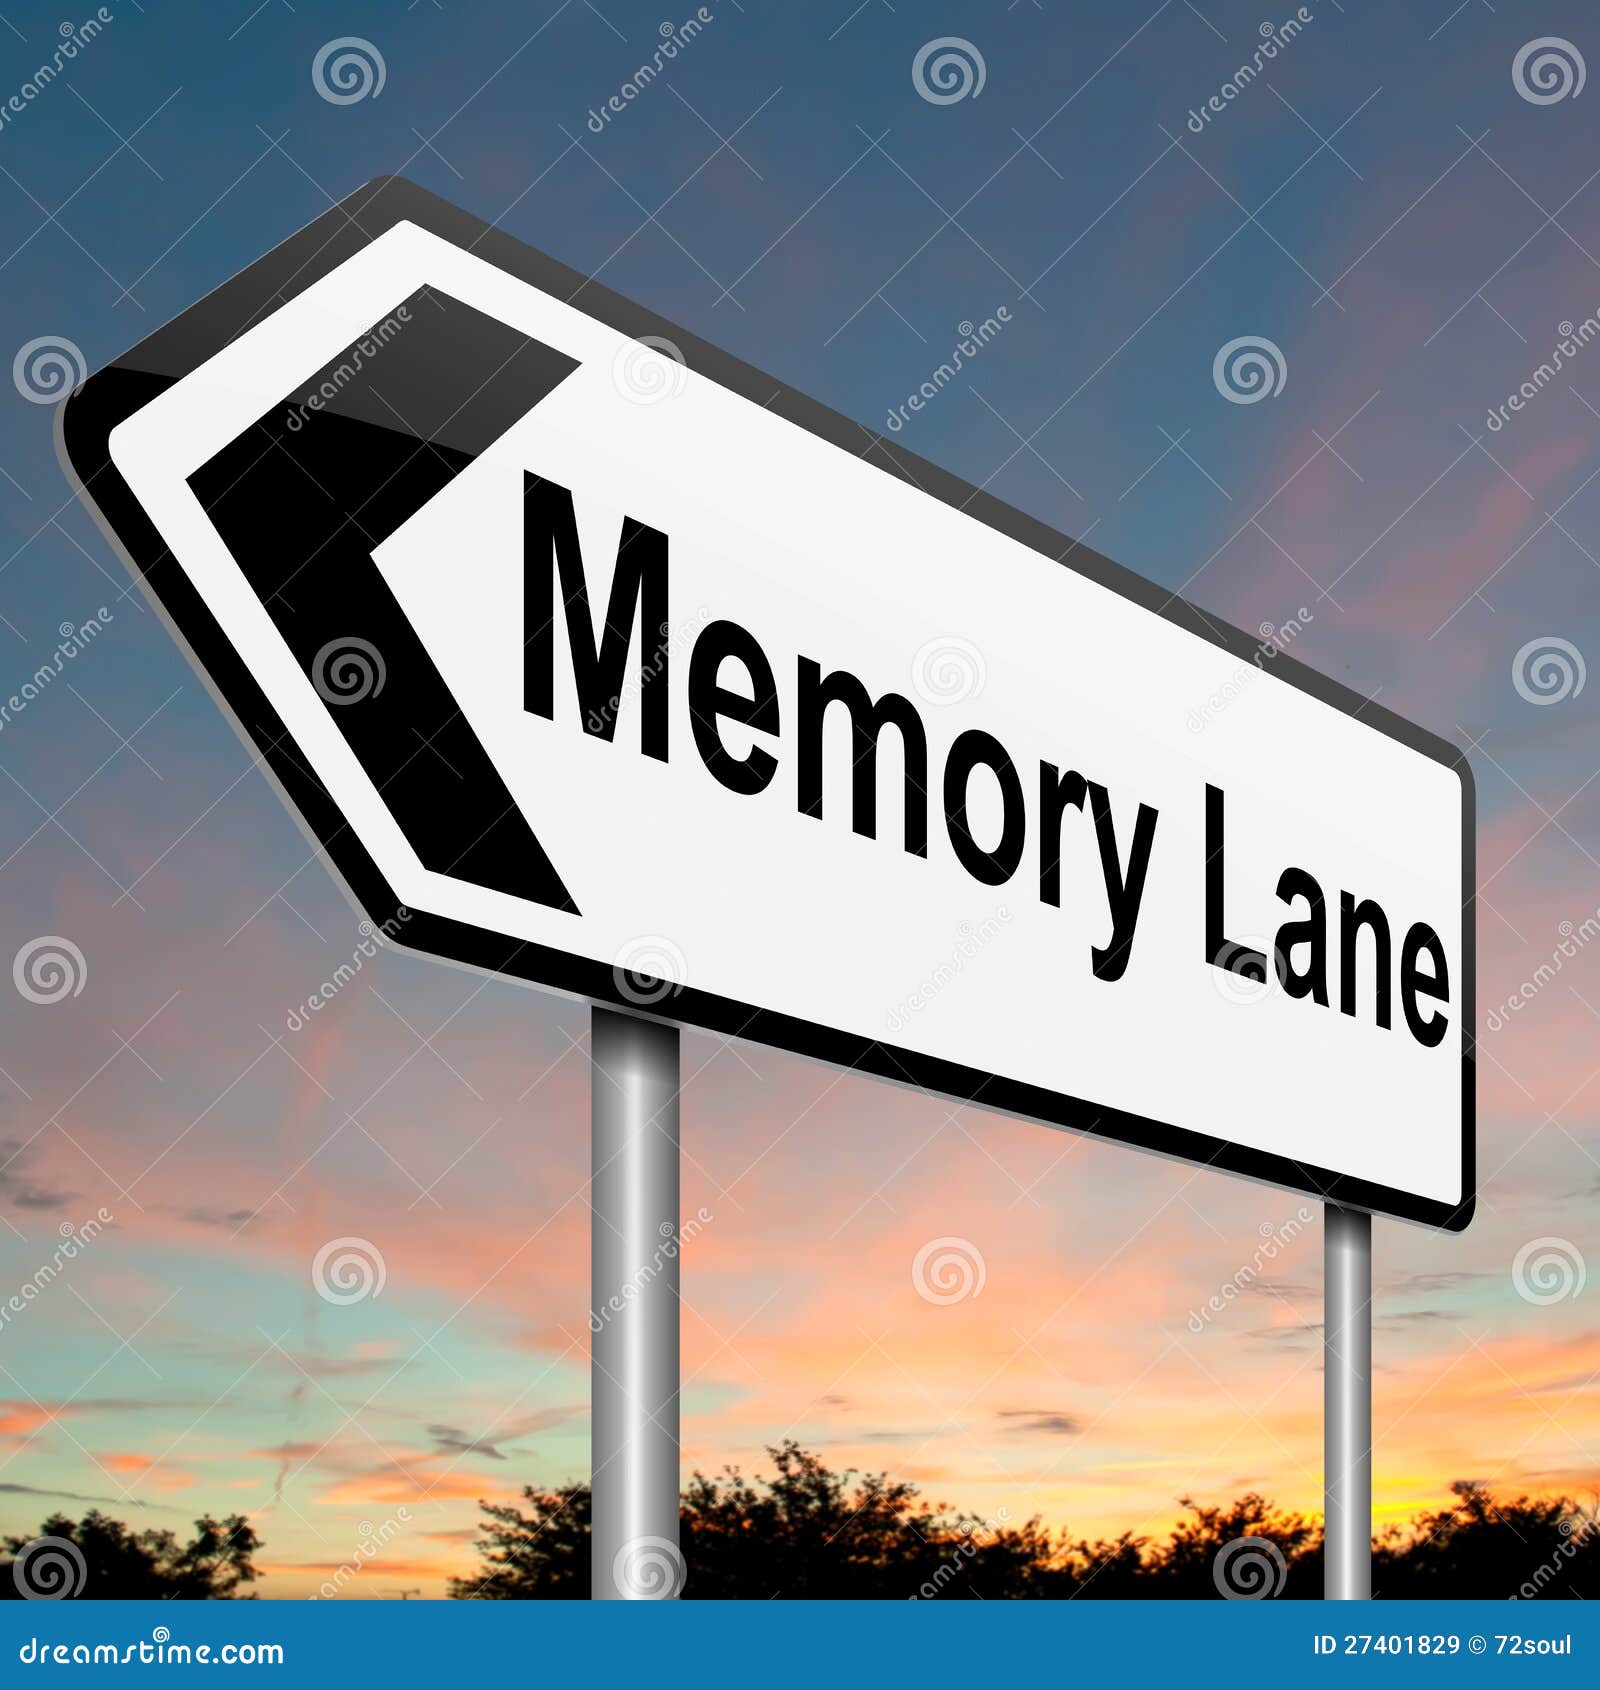 memory lane concept.